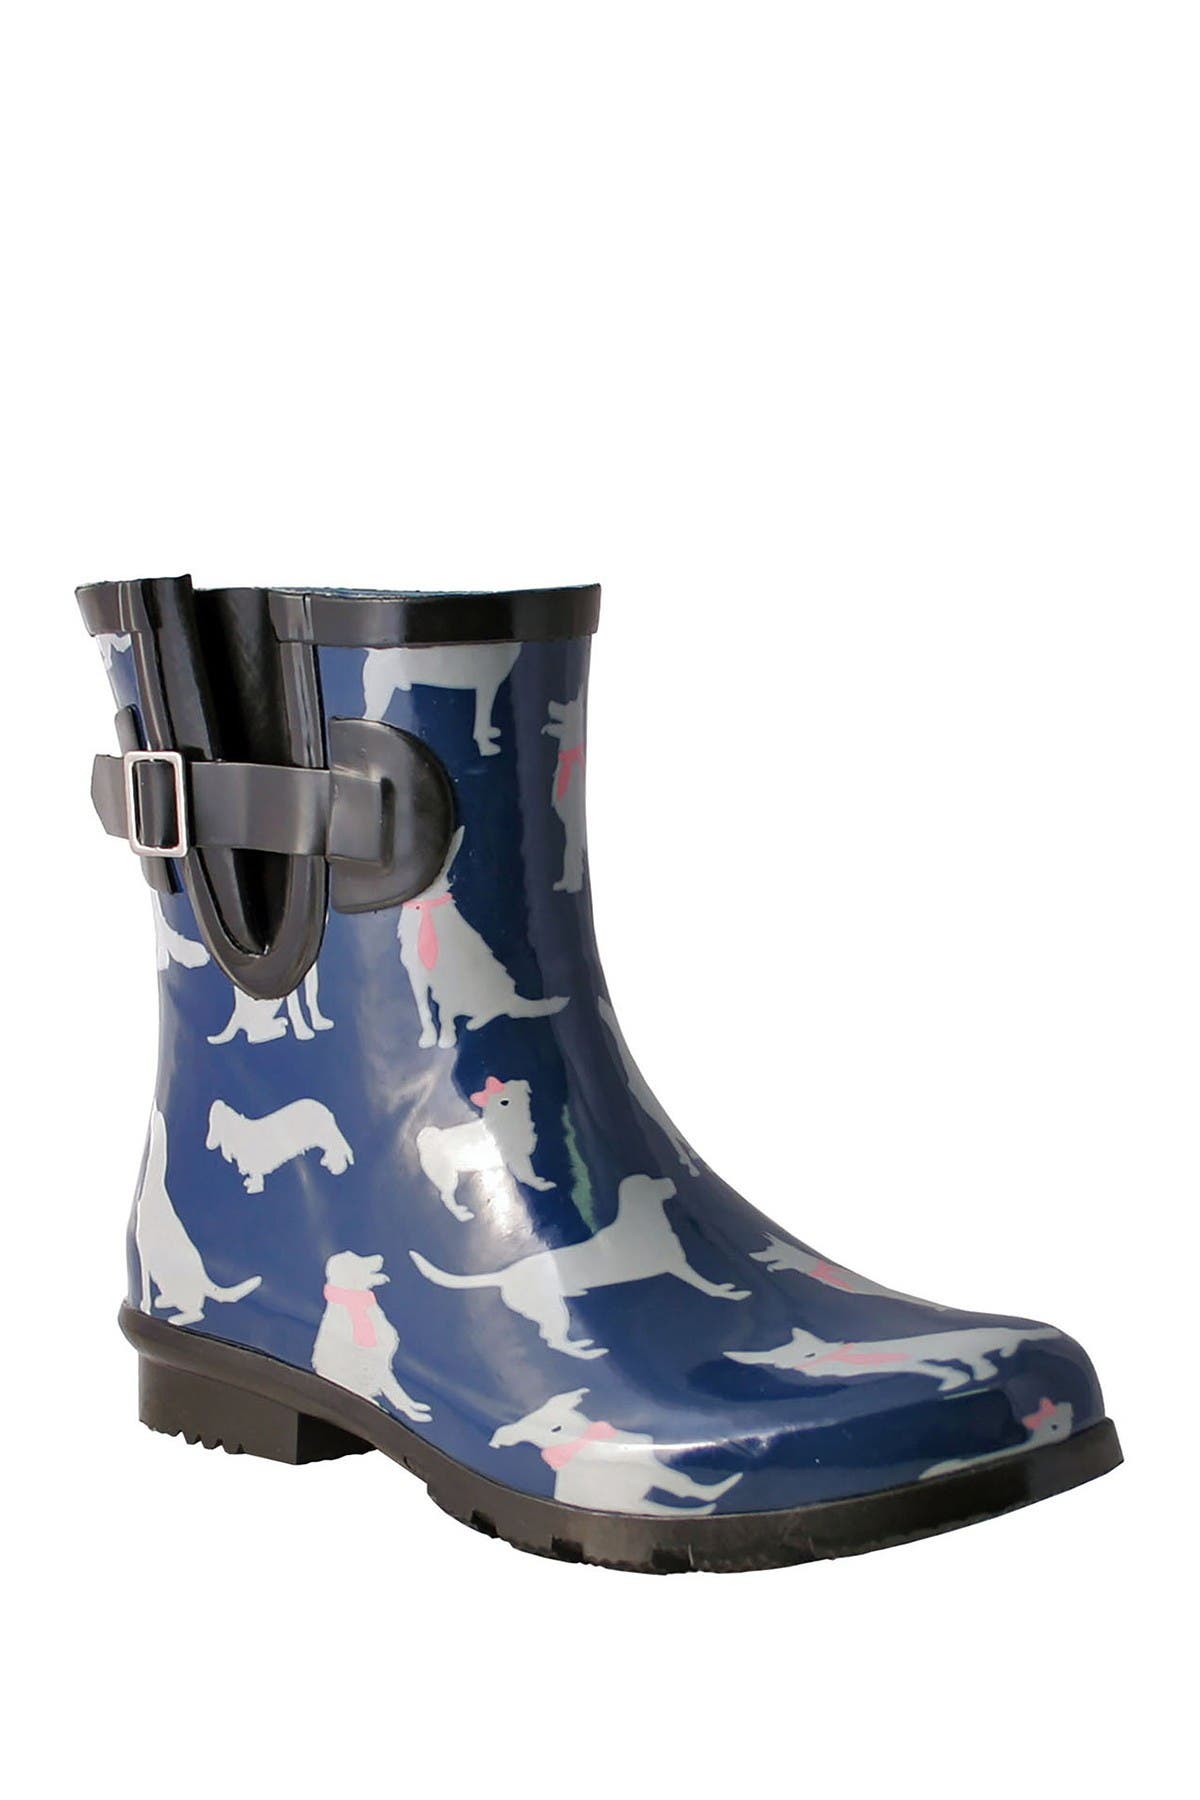 nordstrom rack rain boots